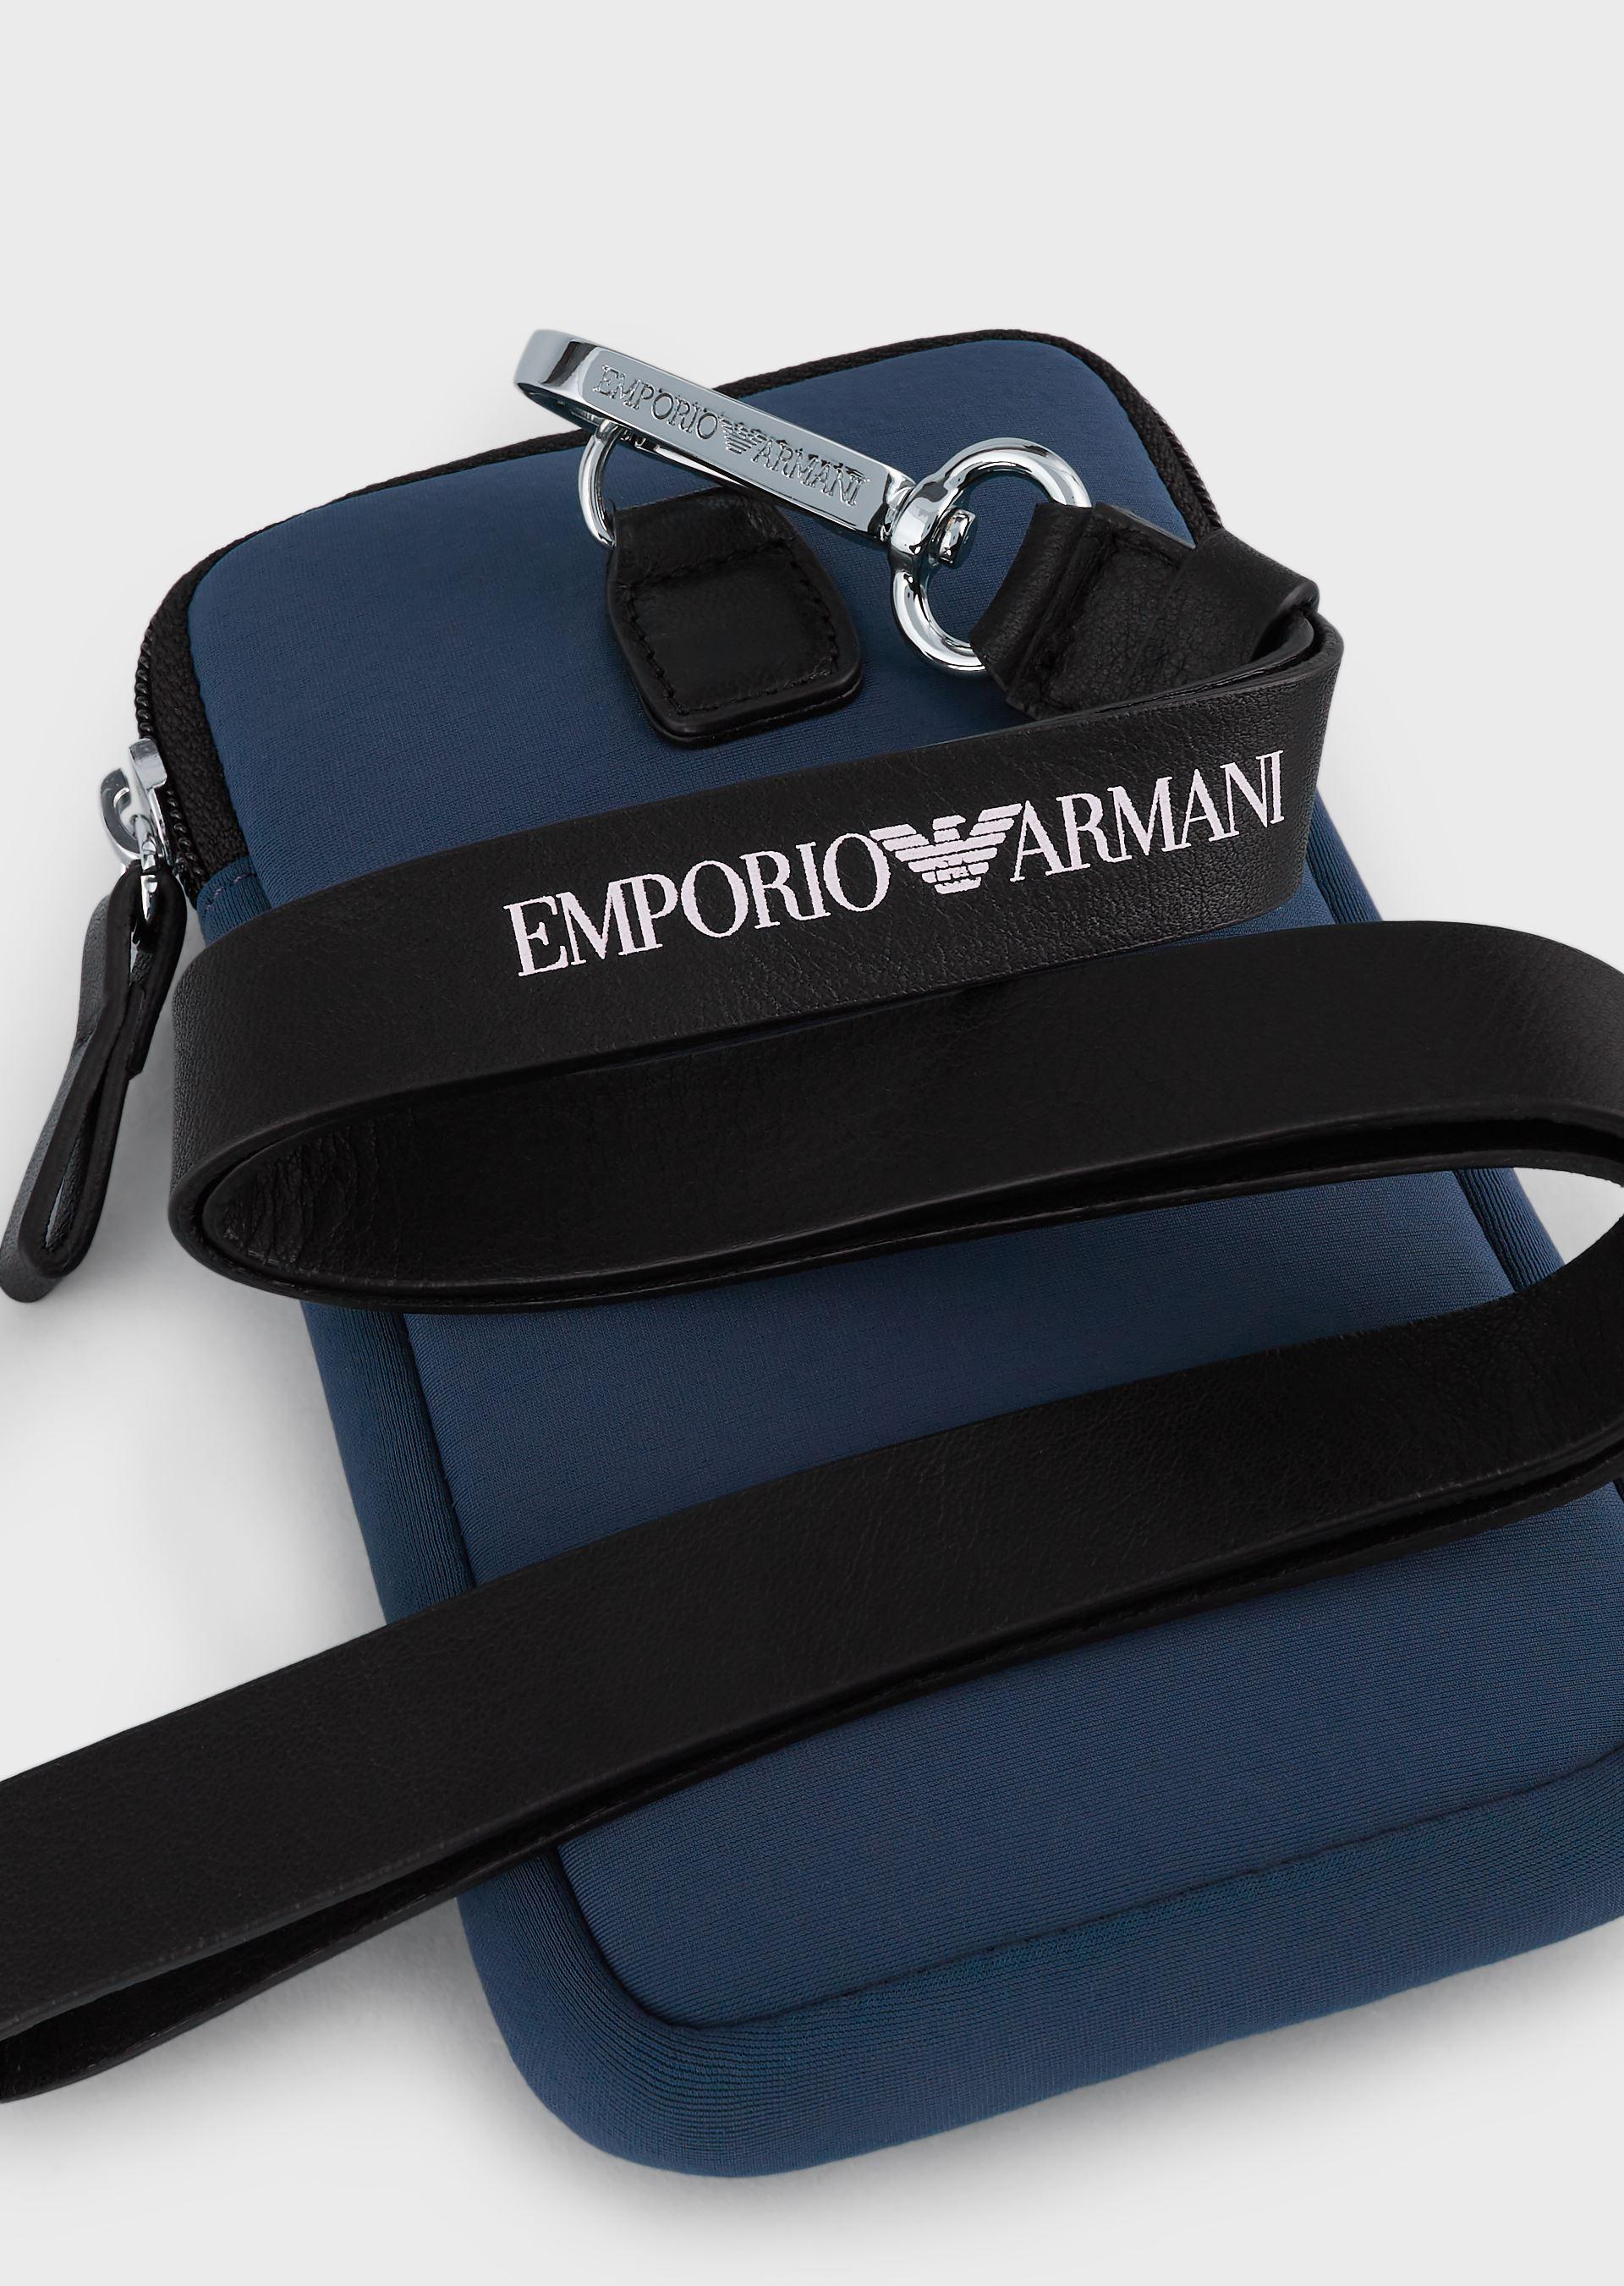 Emporio Armani Iphone Case in Blue | Lyst